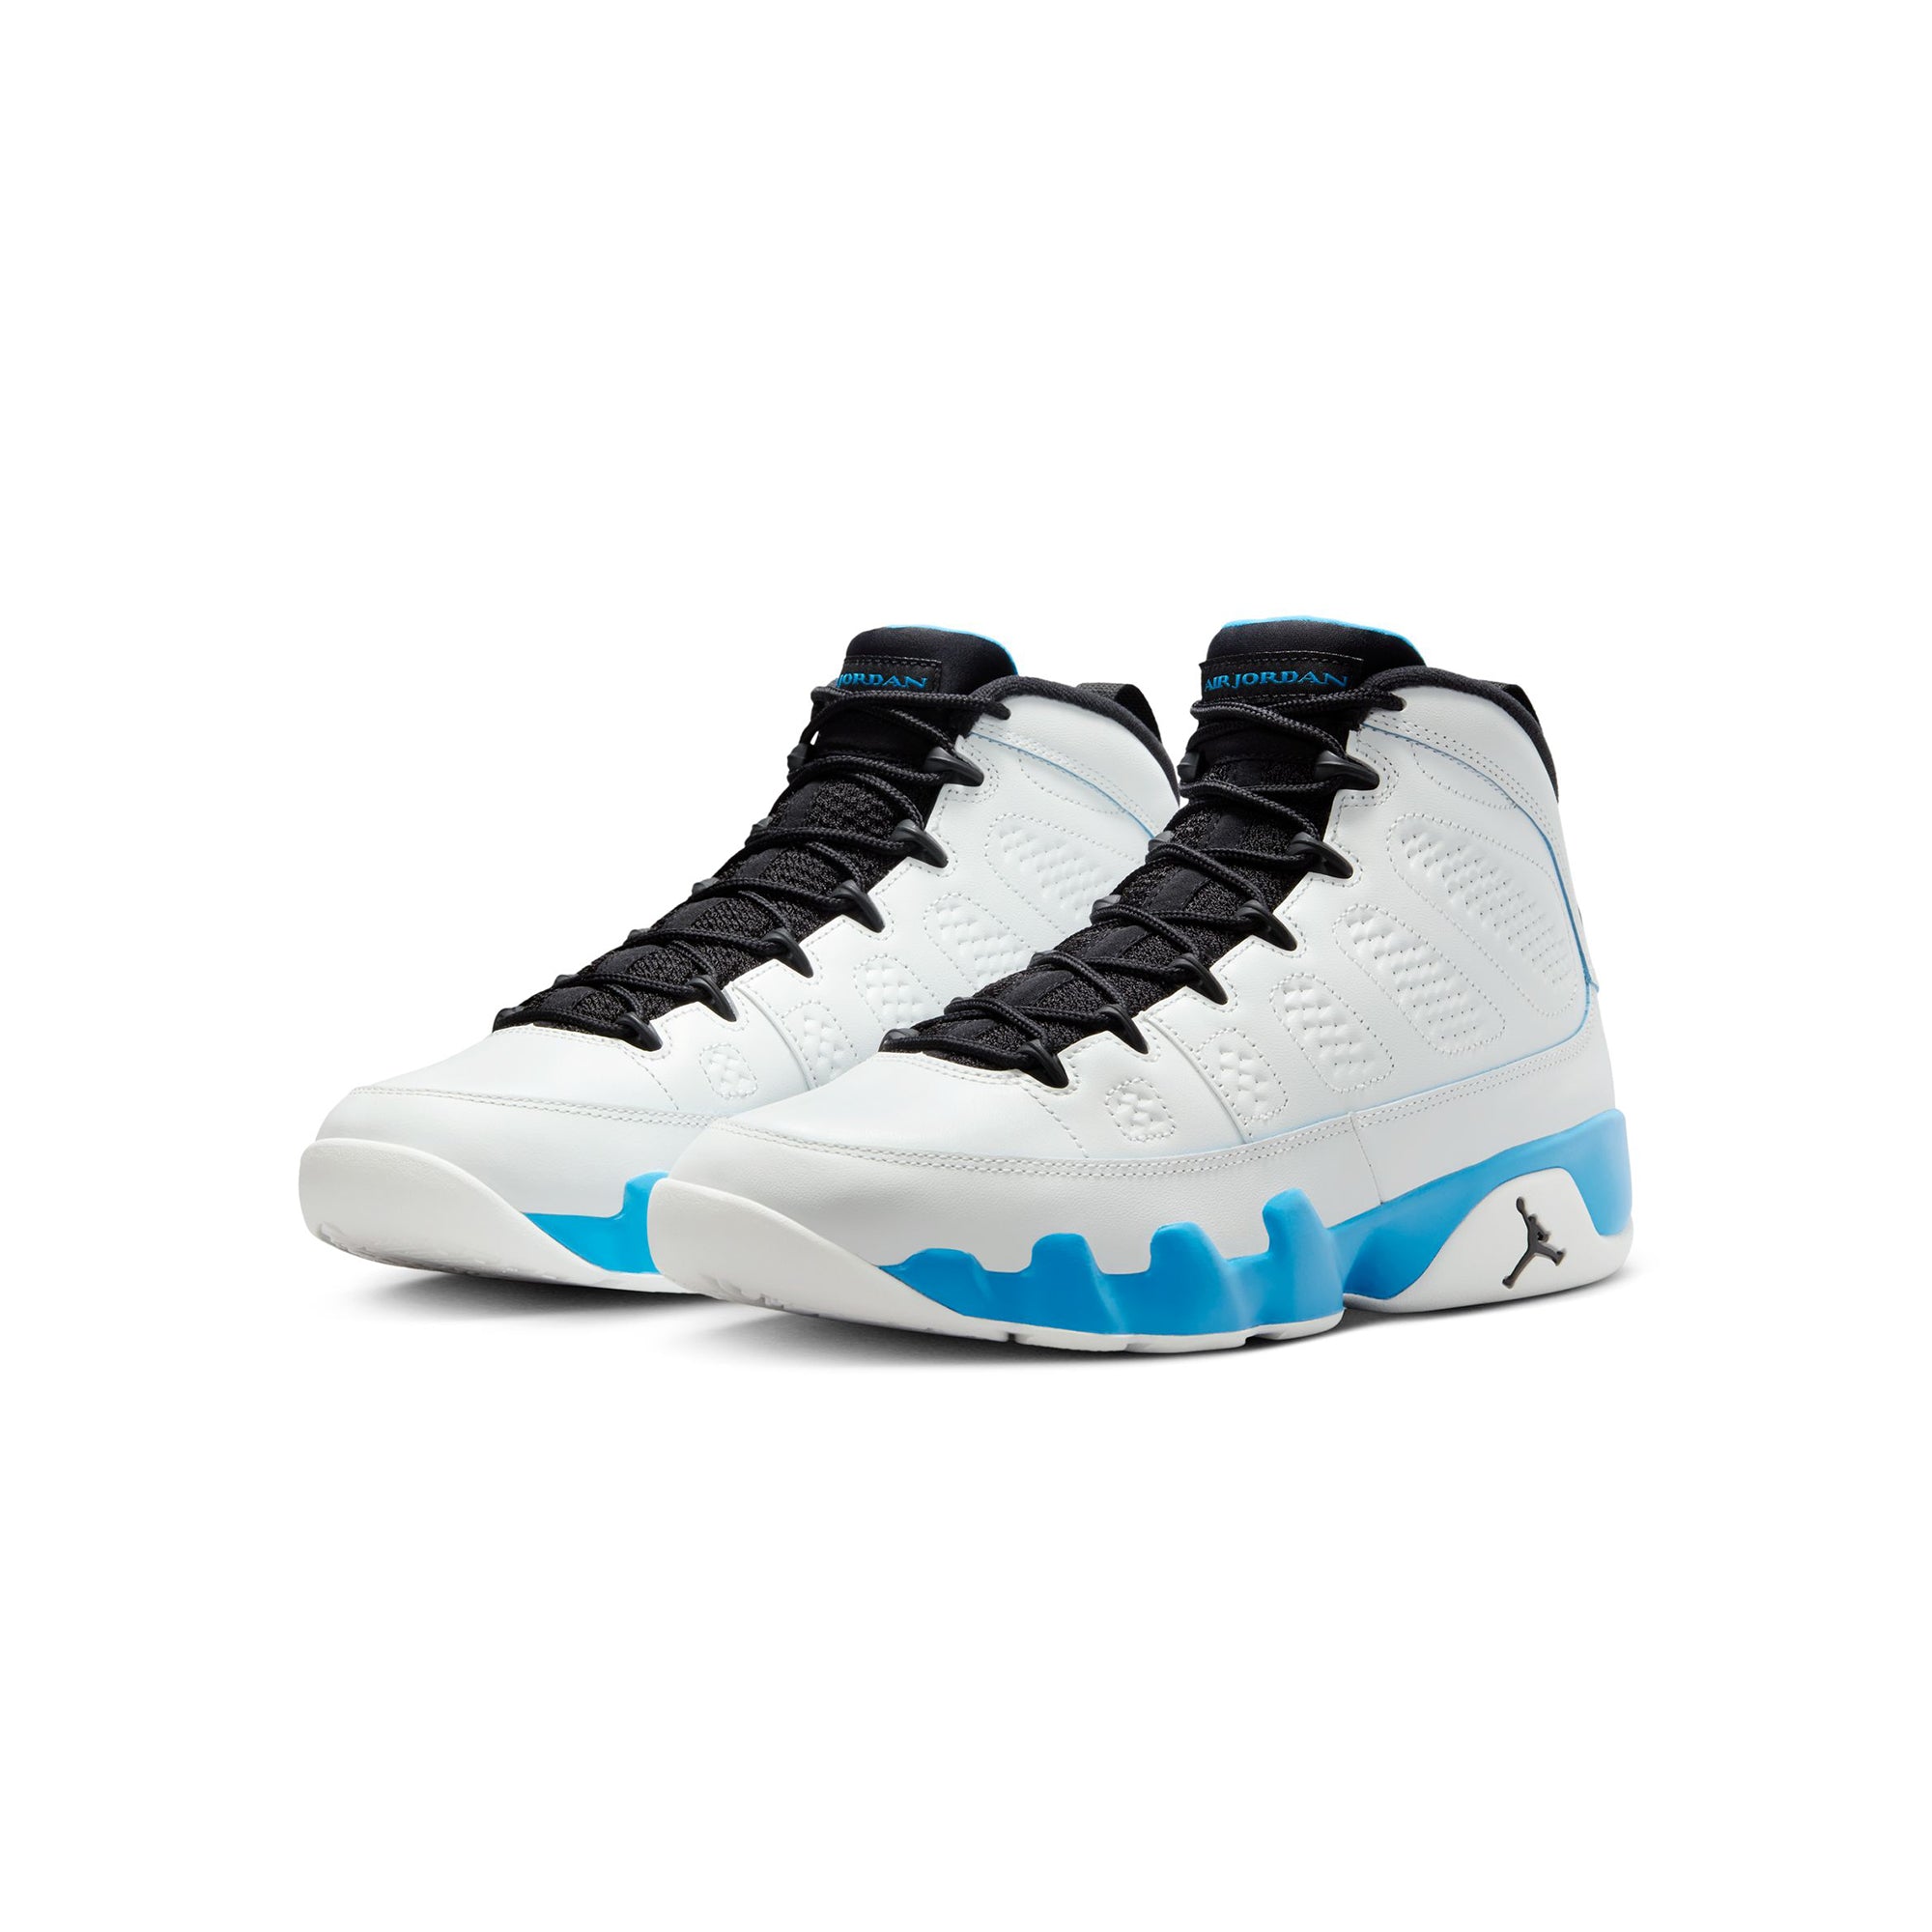 Air Jordan 9 Mens Retro Shoes